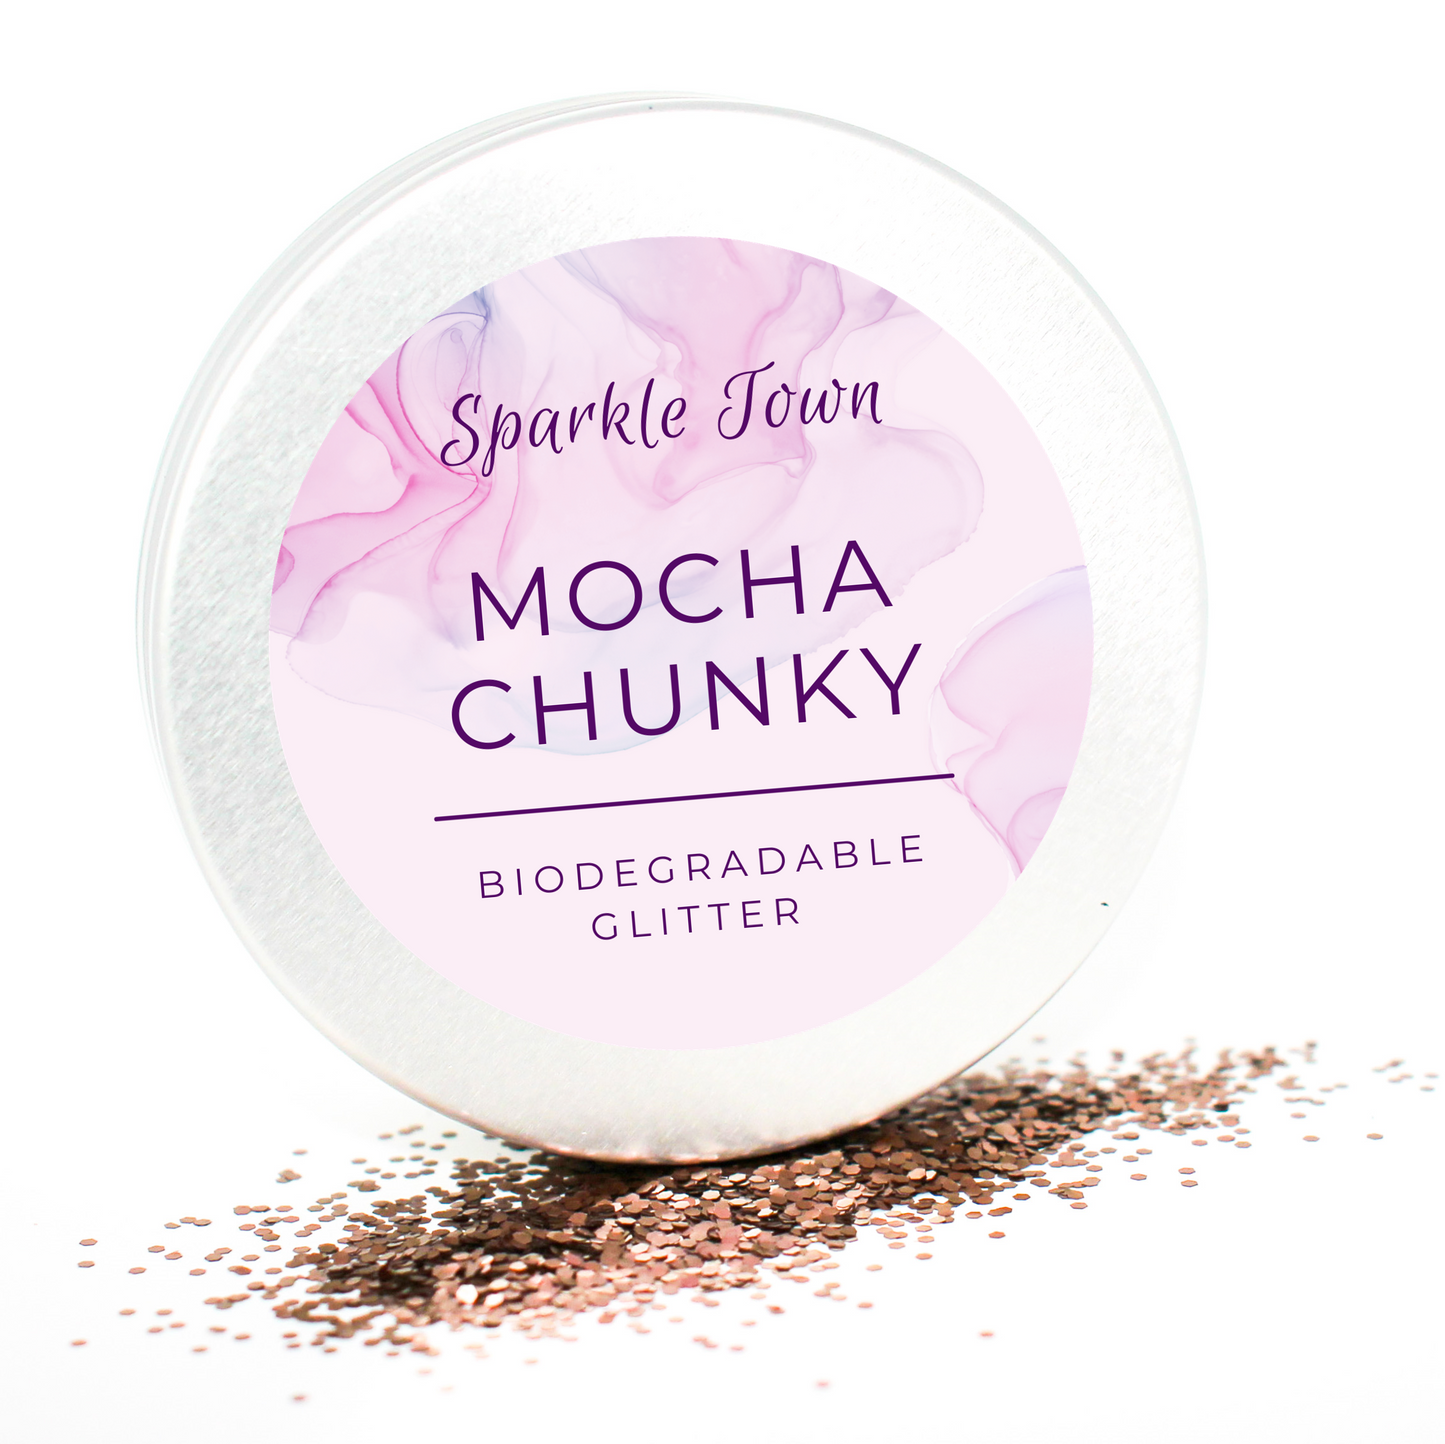 Mocha Chunky Biodegradable Glitter